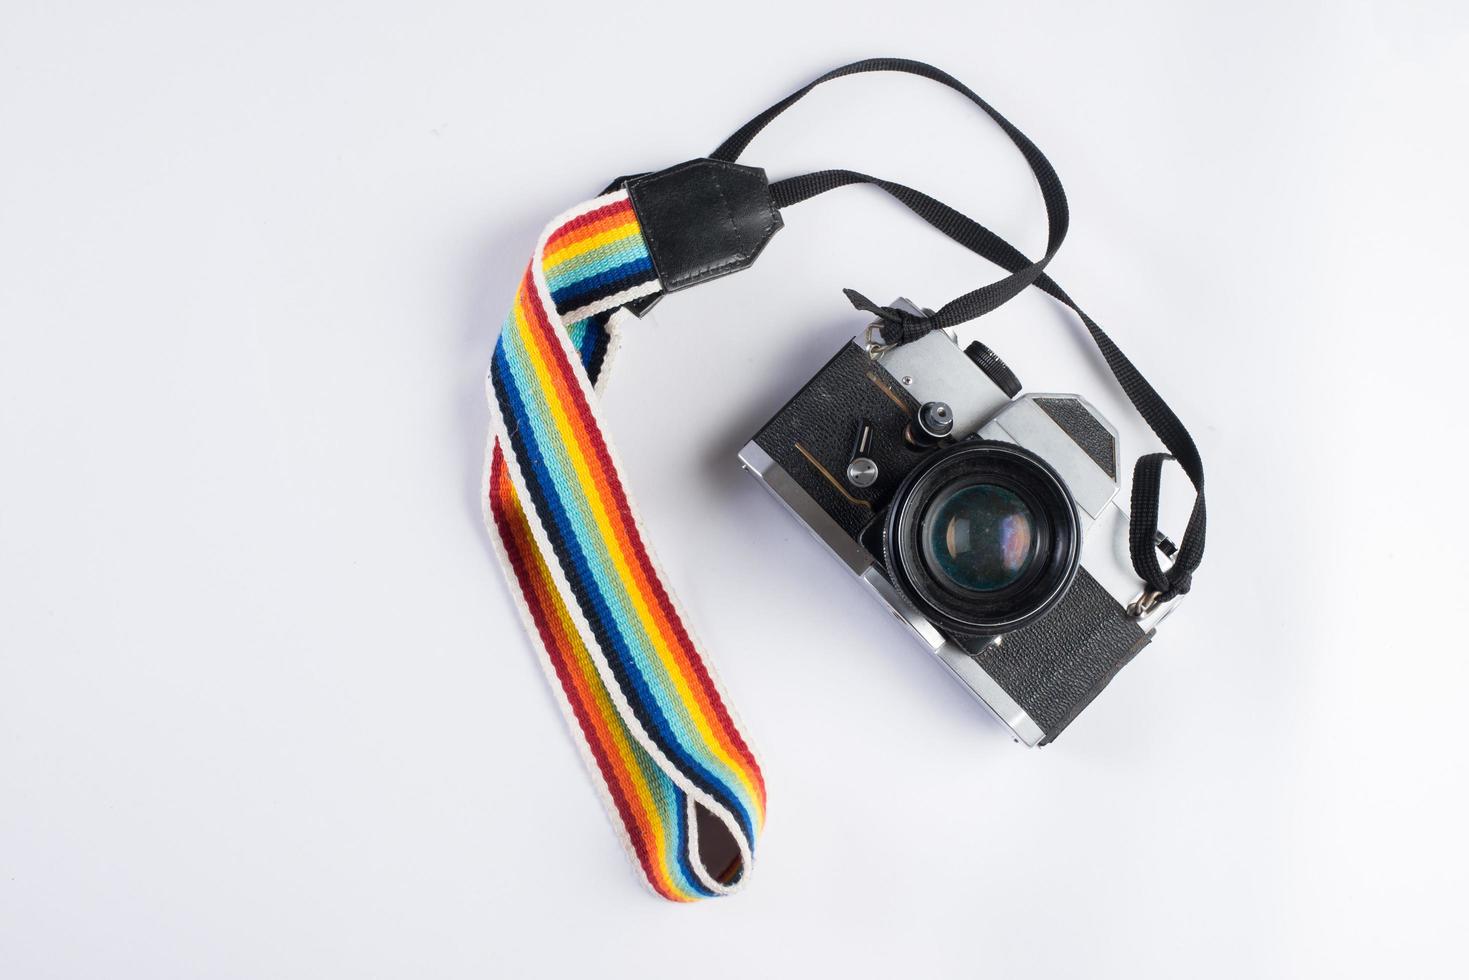 fotocamera vintage isolare su sfondo bianco foto